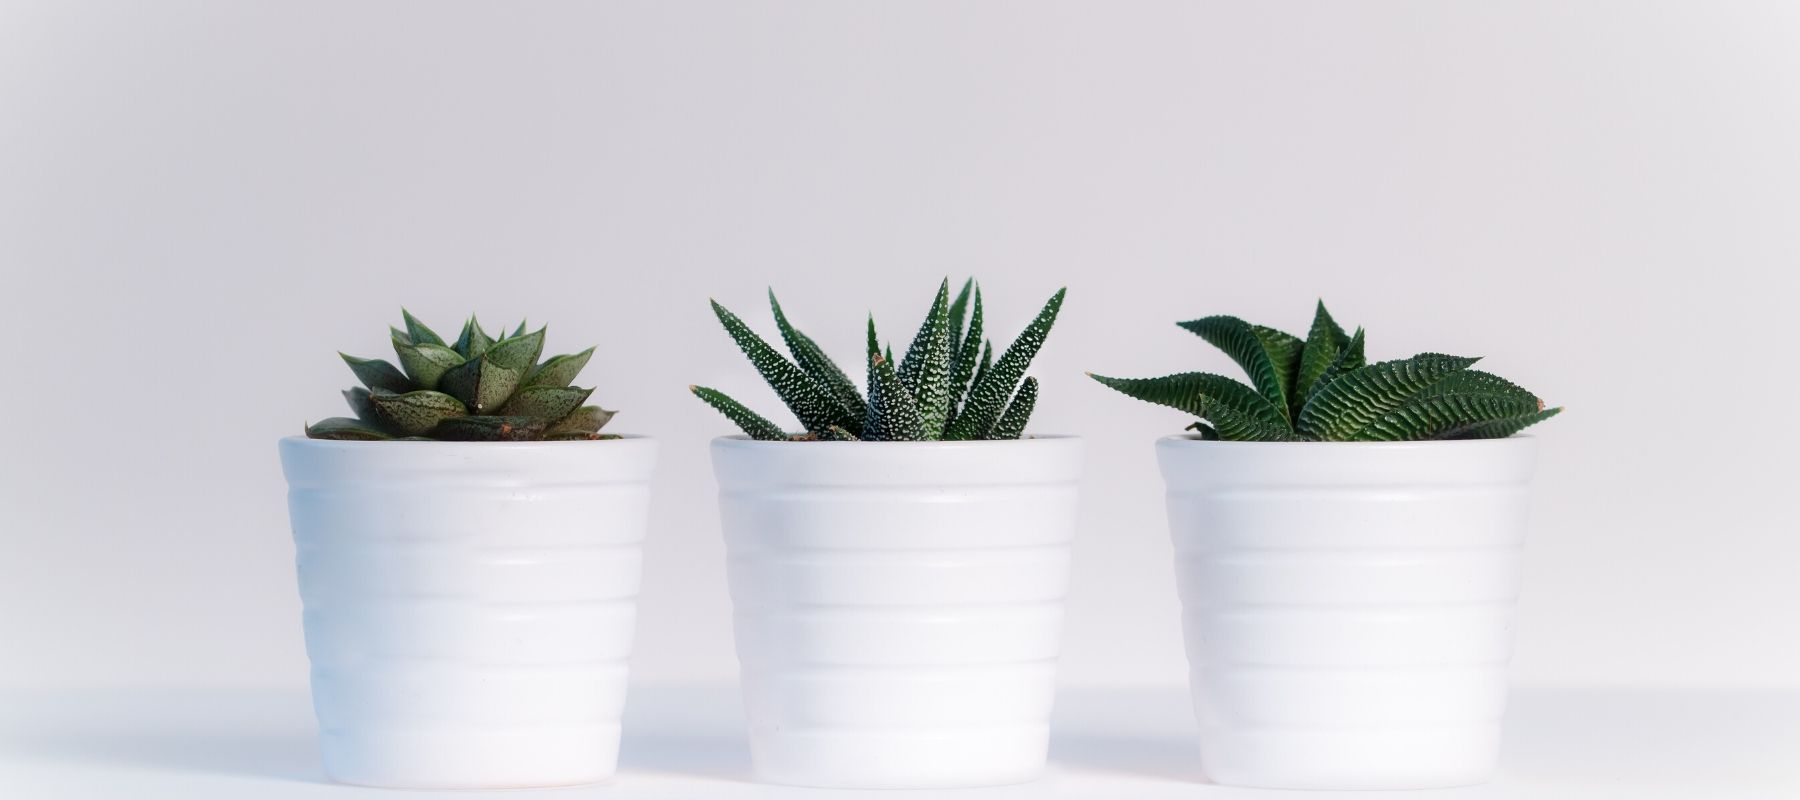 Three small plants in white pots